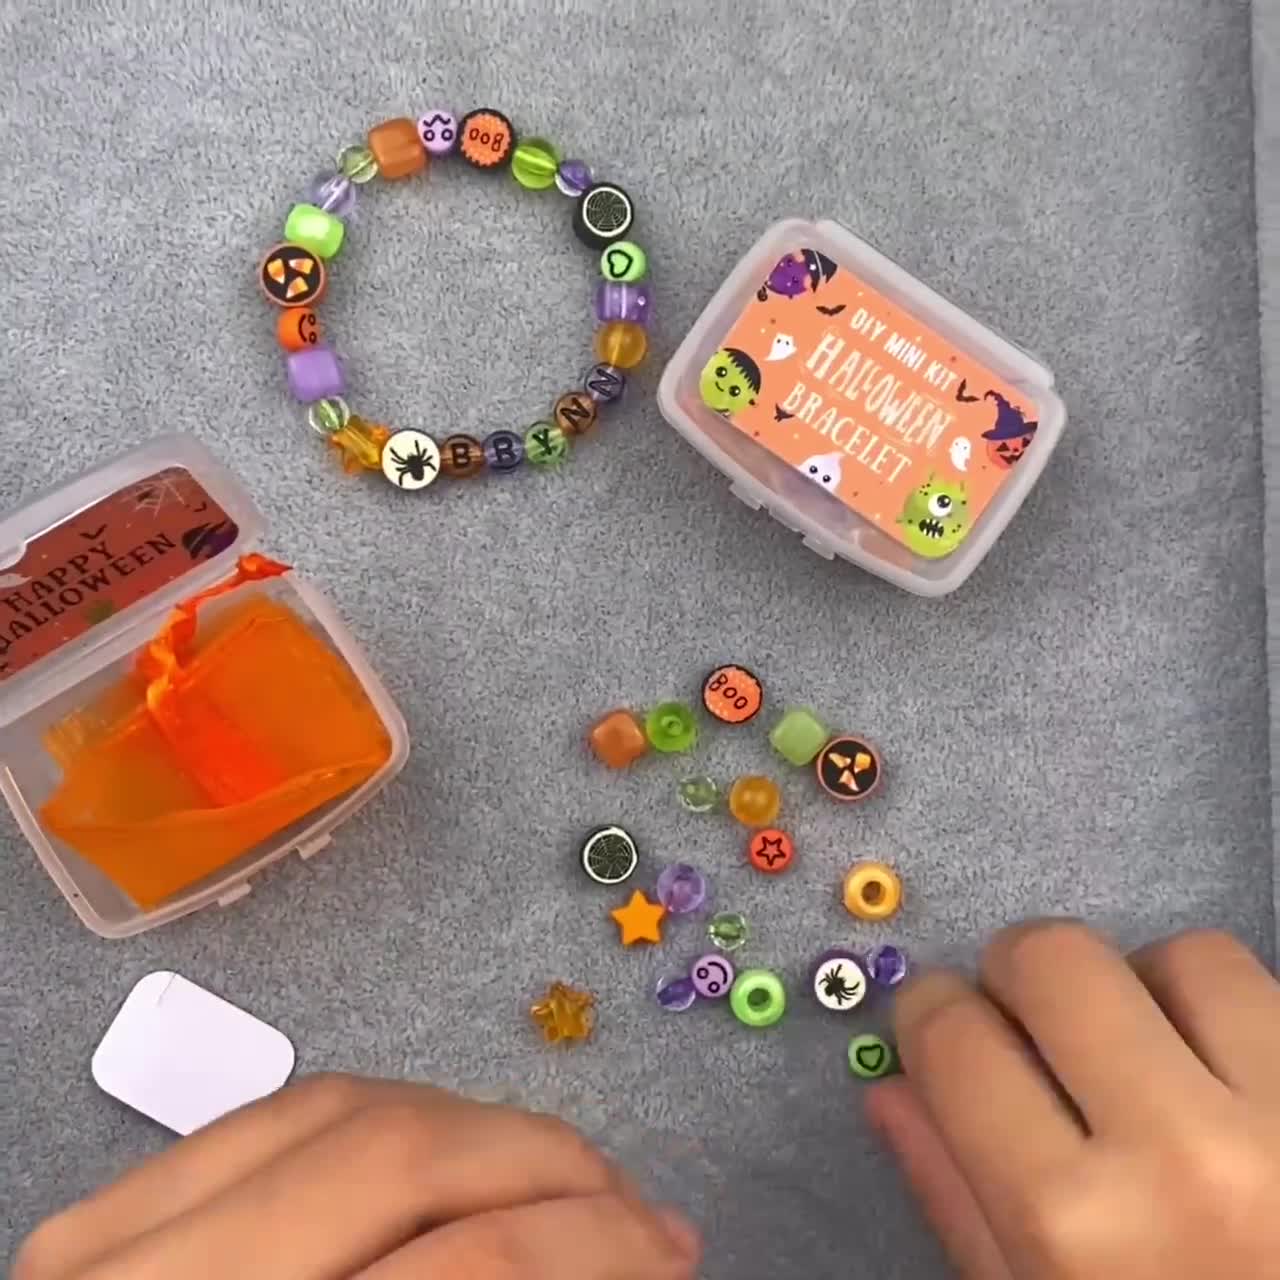 DIY Little Girl Bracelets Making Kit Girl Party Activity Box Craft